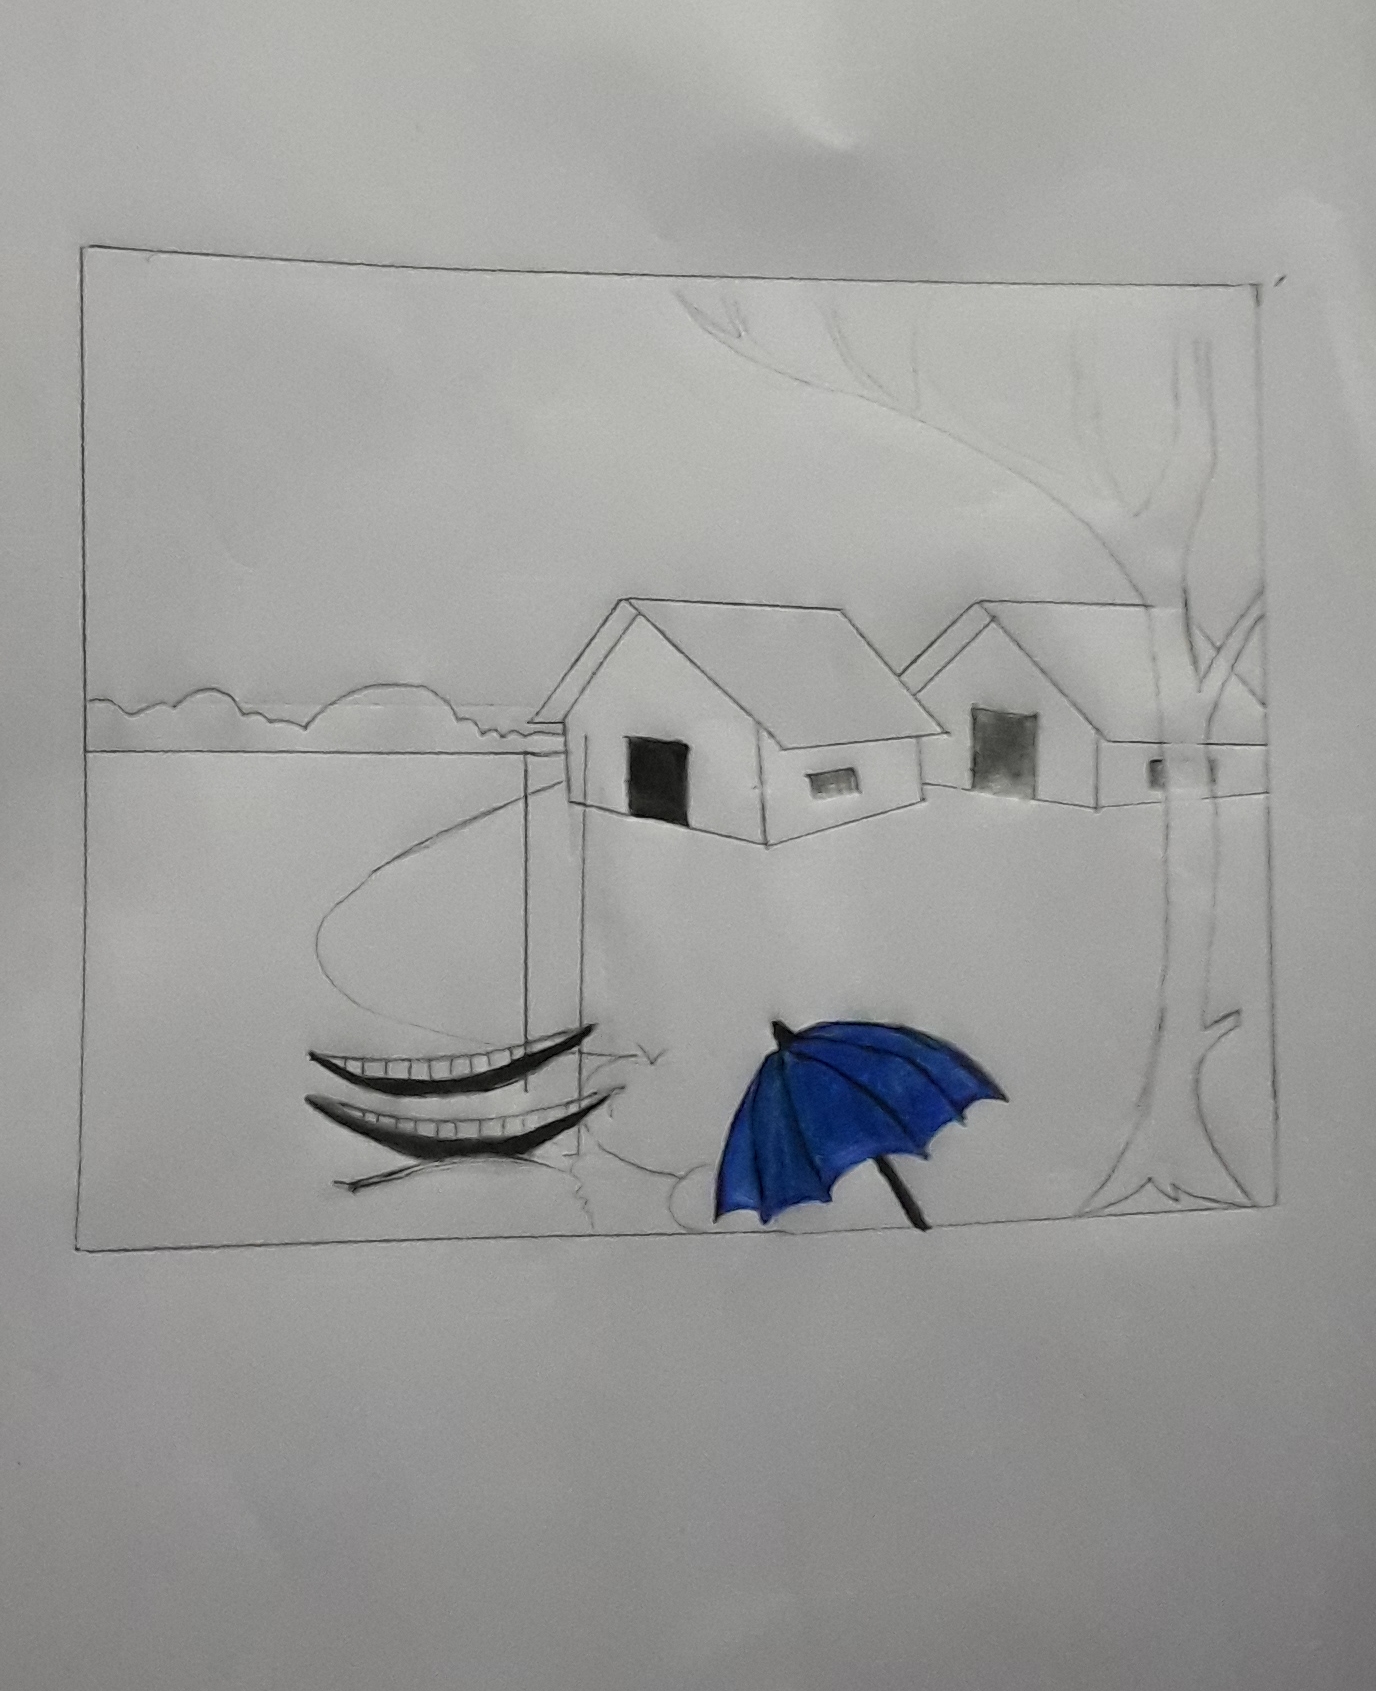 Rainy season drawing l how to draw rainy season l welcome rain ☔ l easy  drawing - YouTube